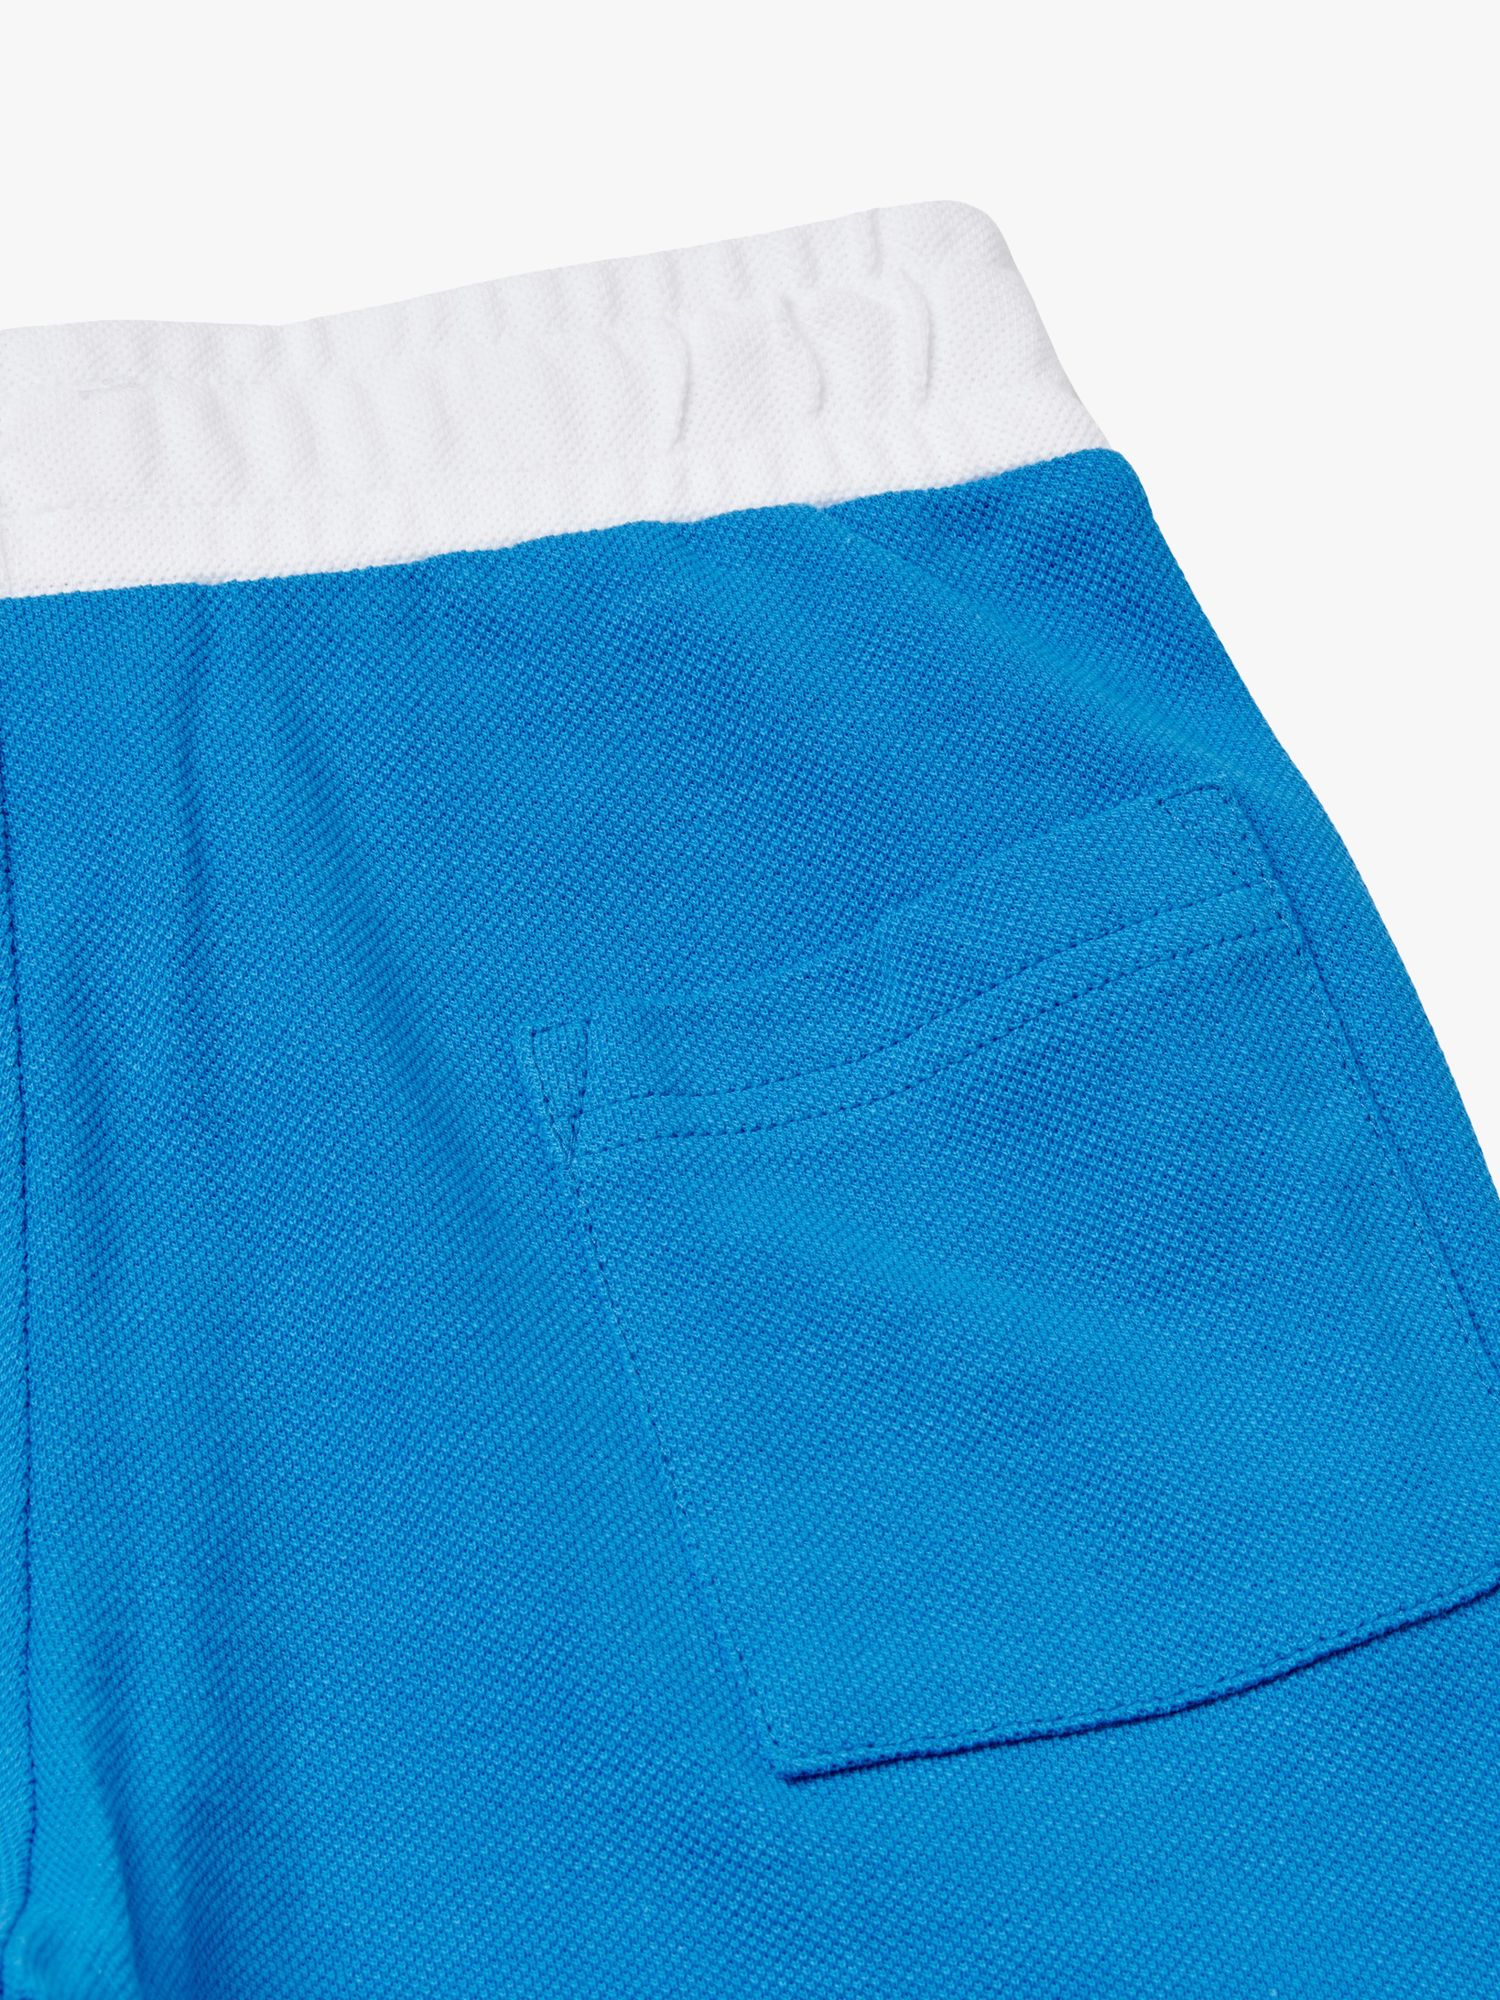 Benetton Kids' Cotton Pique Bermuda Shorts, Sky Blue, 3-4 years